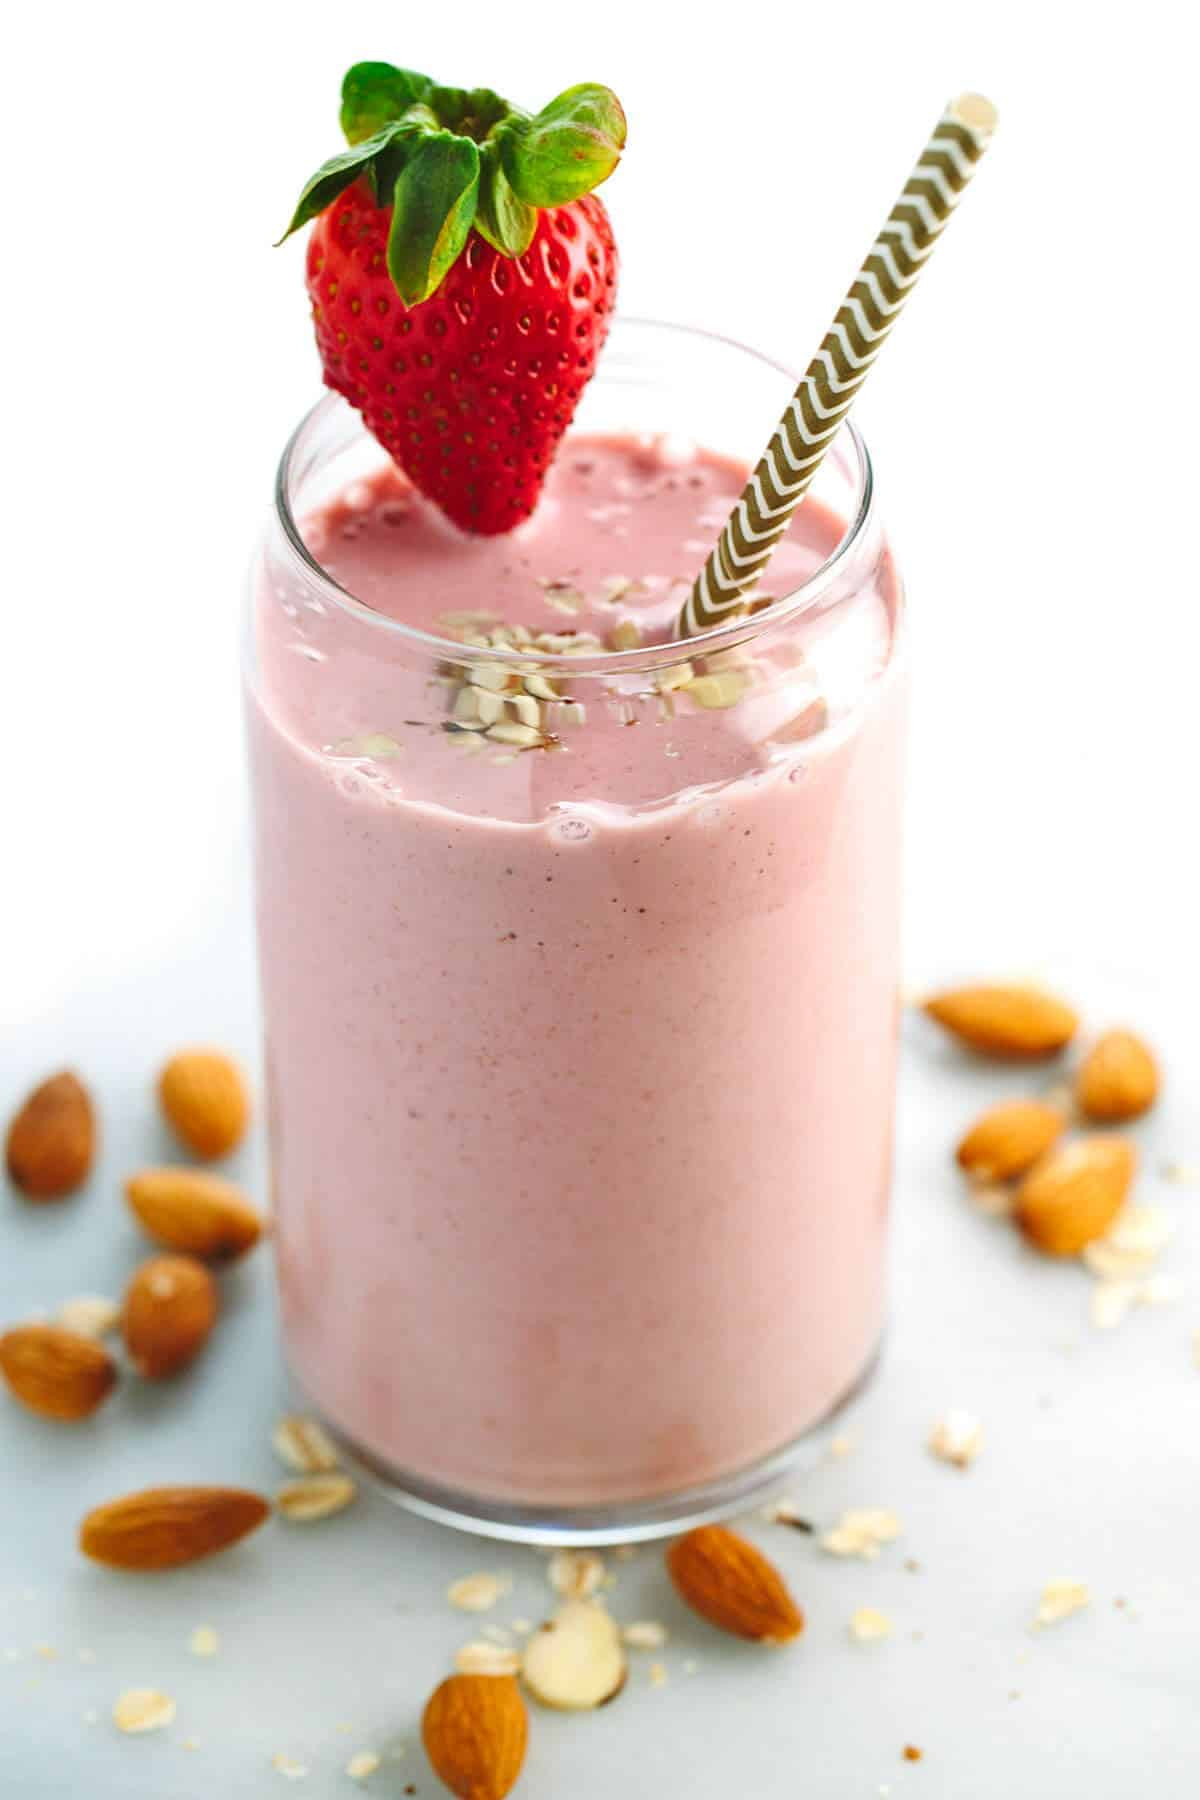 Fruit Smoothie Recipes With Yogurt
 Strawberry Banana Smoothie Recipe with Almond Milk